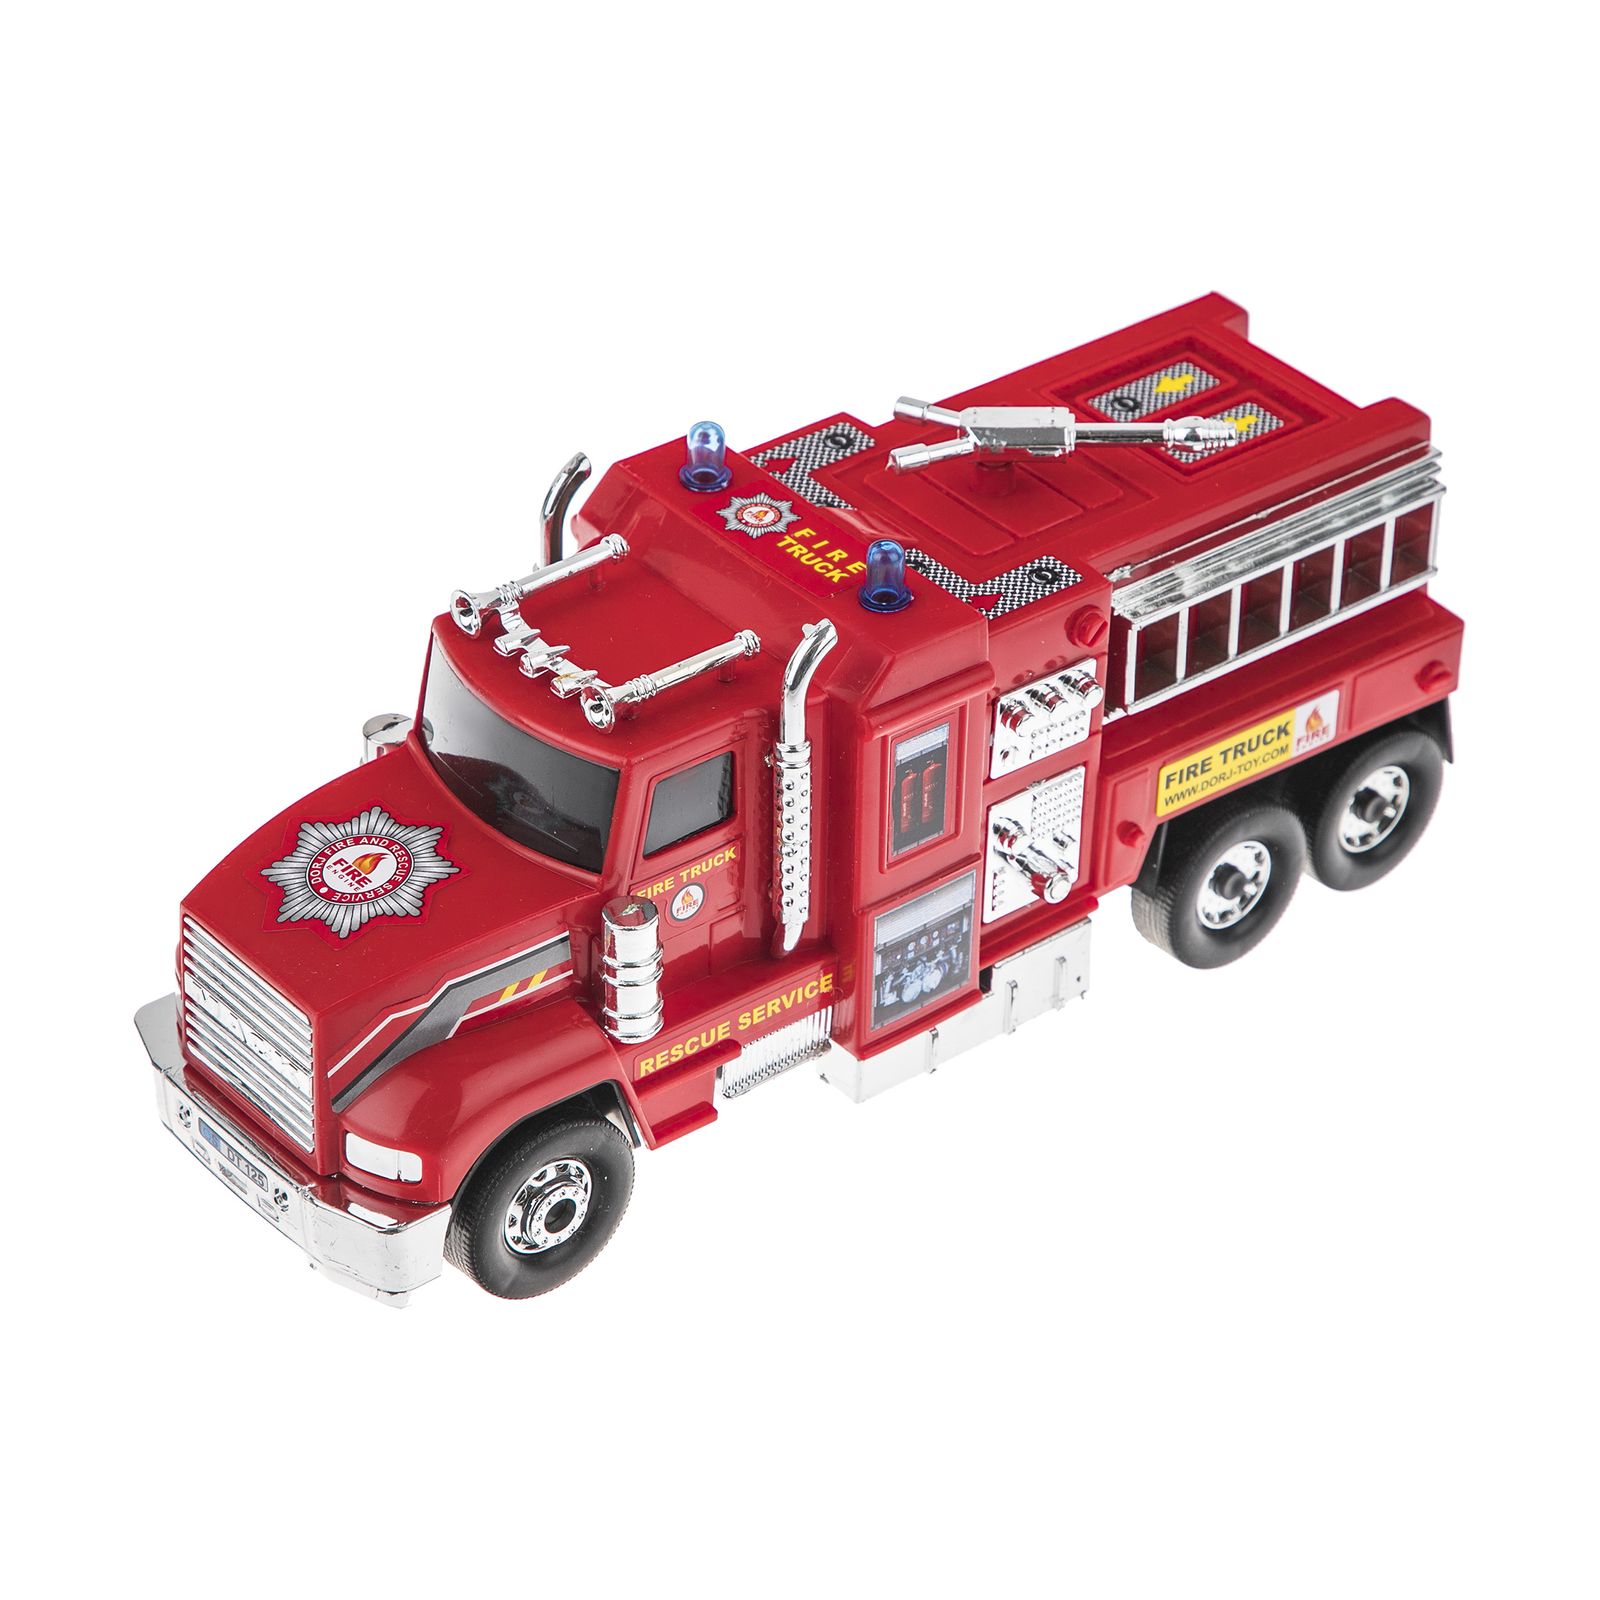 ماشین آتش نشانی اسباب بازی دورج توی طرح Fire Truck -  - 1